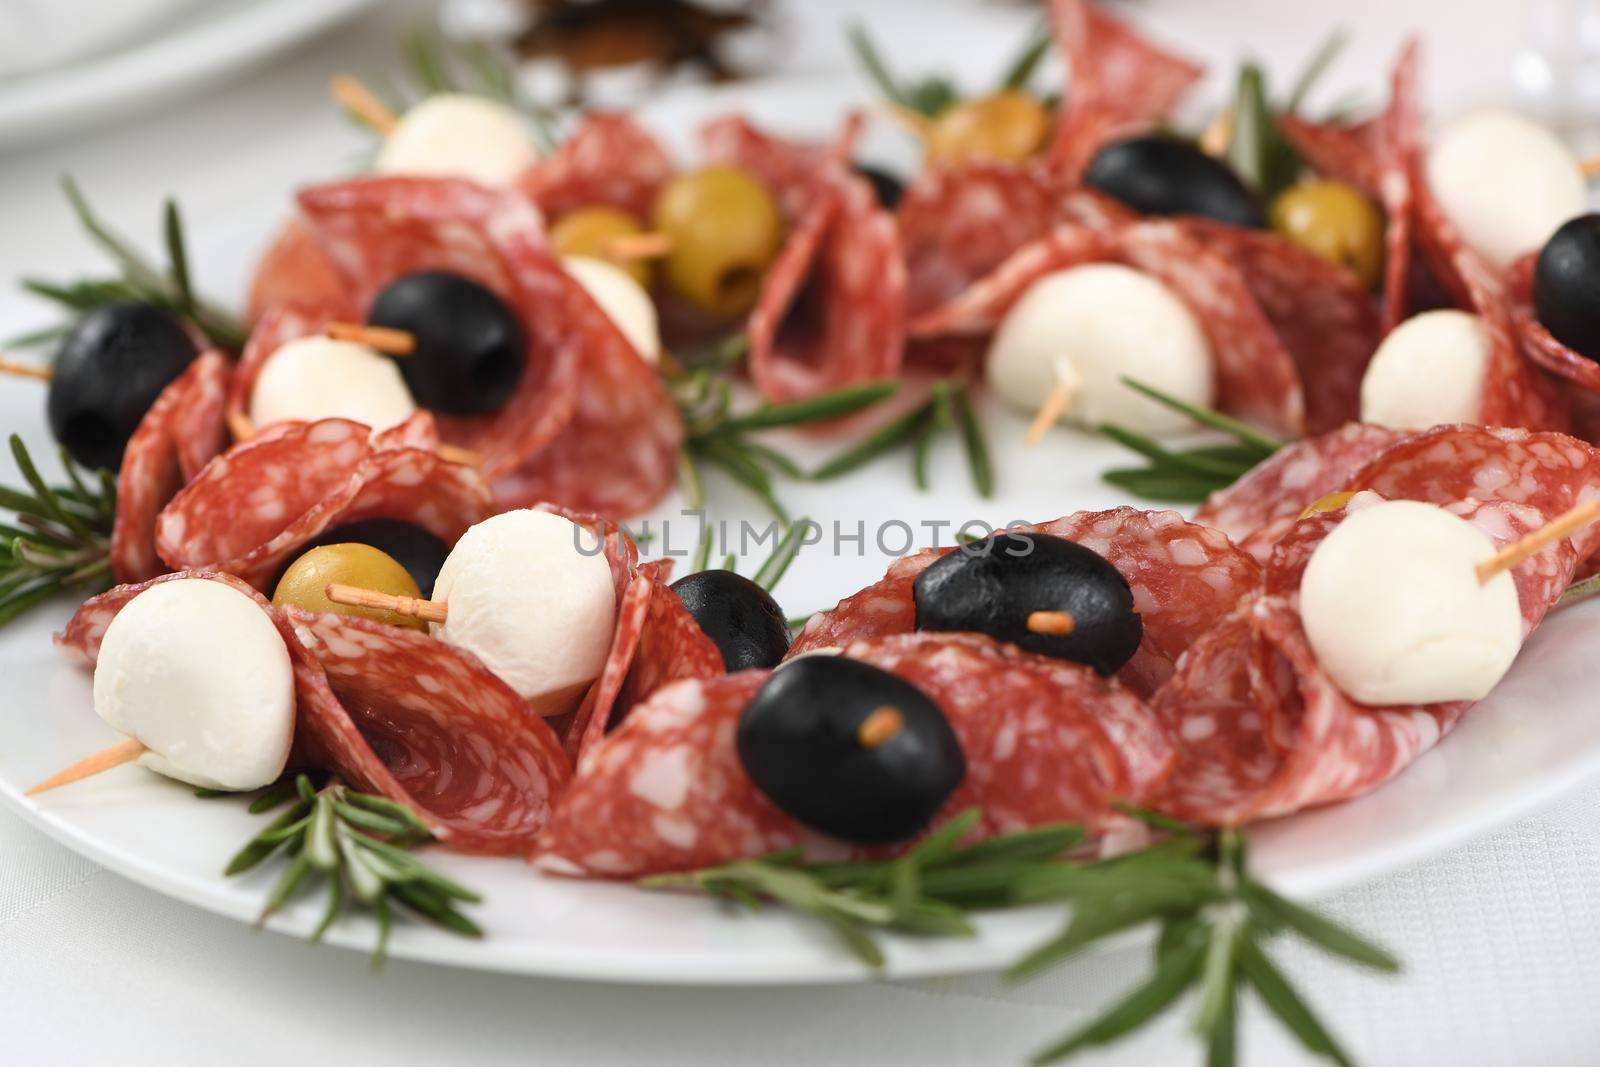  Christmas wreath - antipasto. Salami canapes with olives, baby mozzarella.